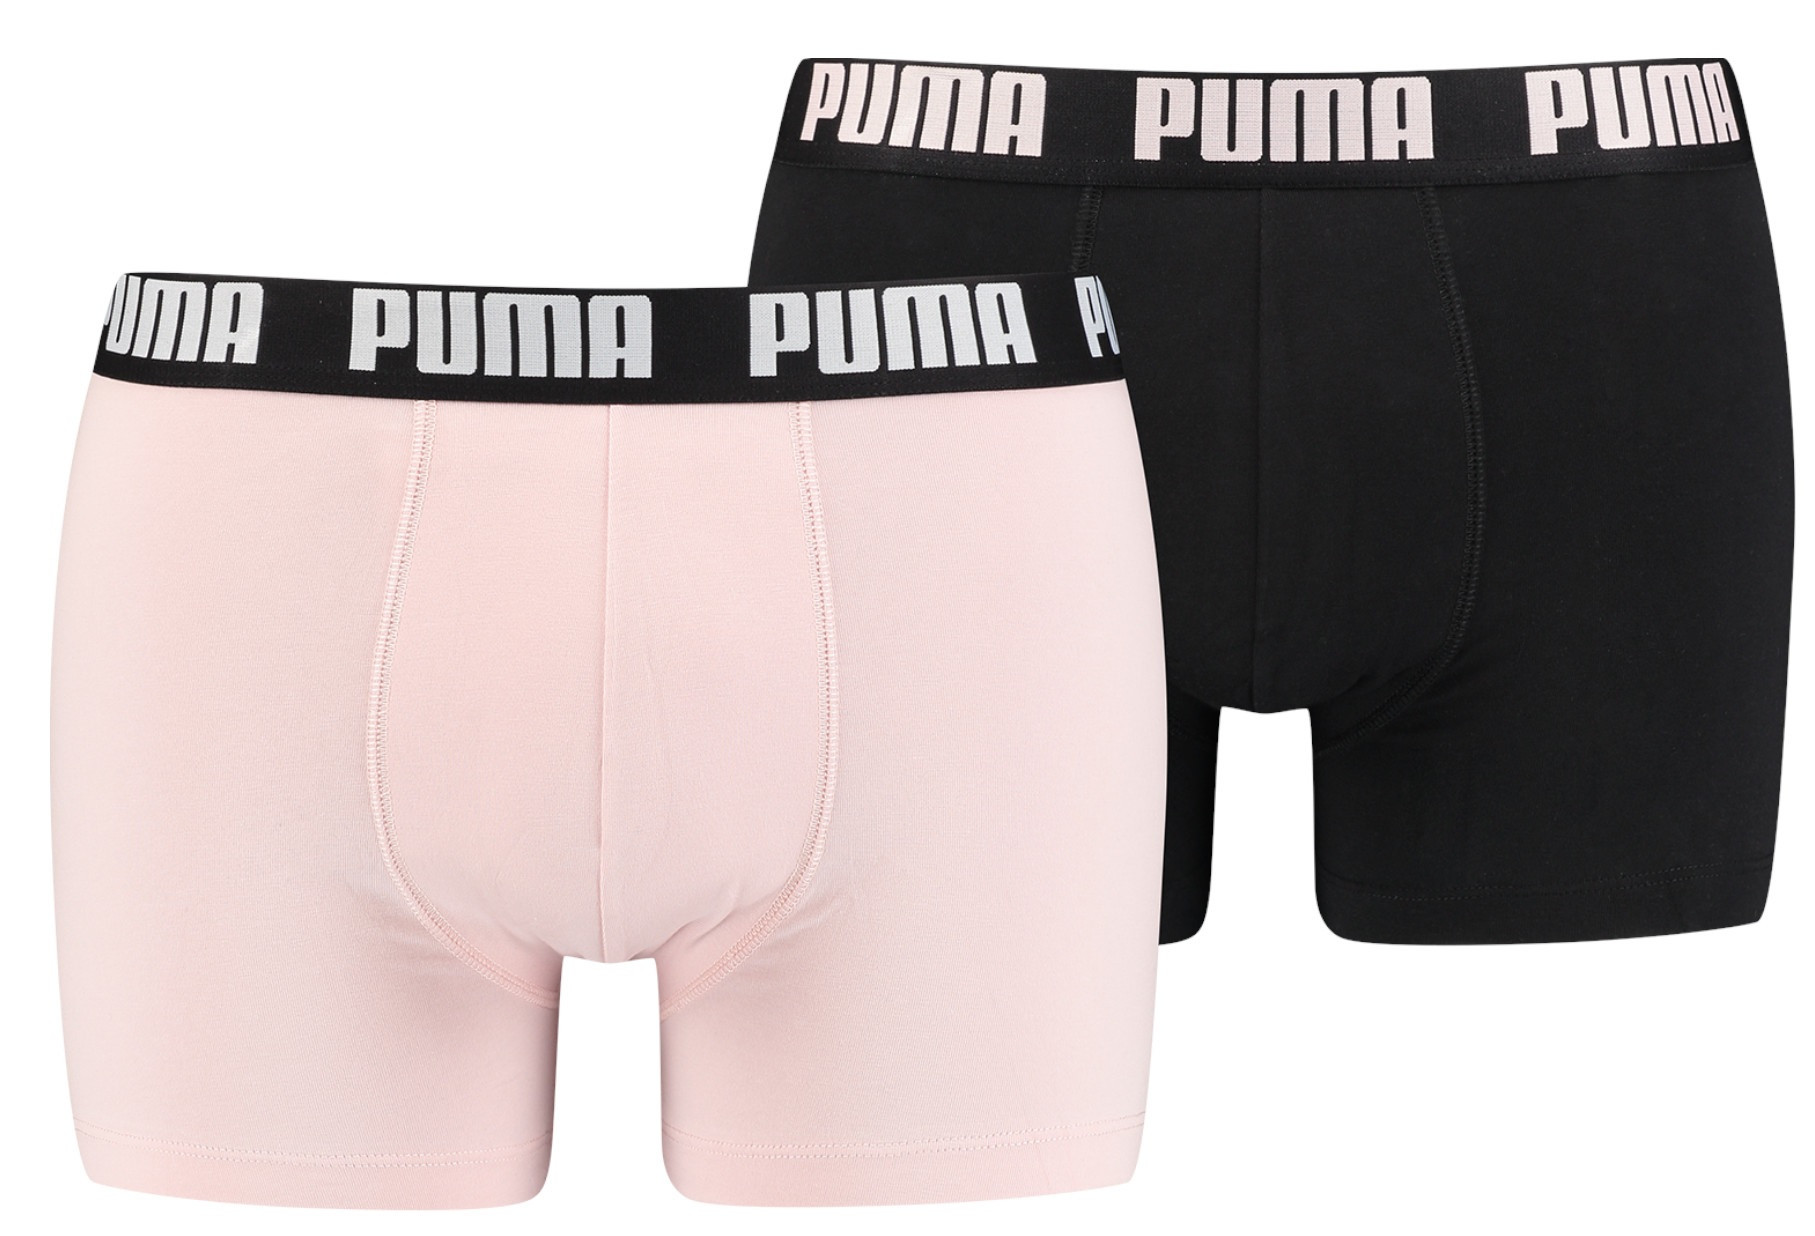 2PACK men's Puma multicolored boxers (521015001 027)